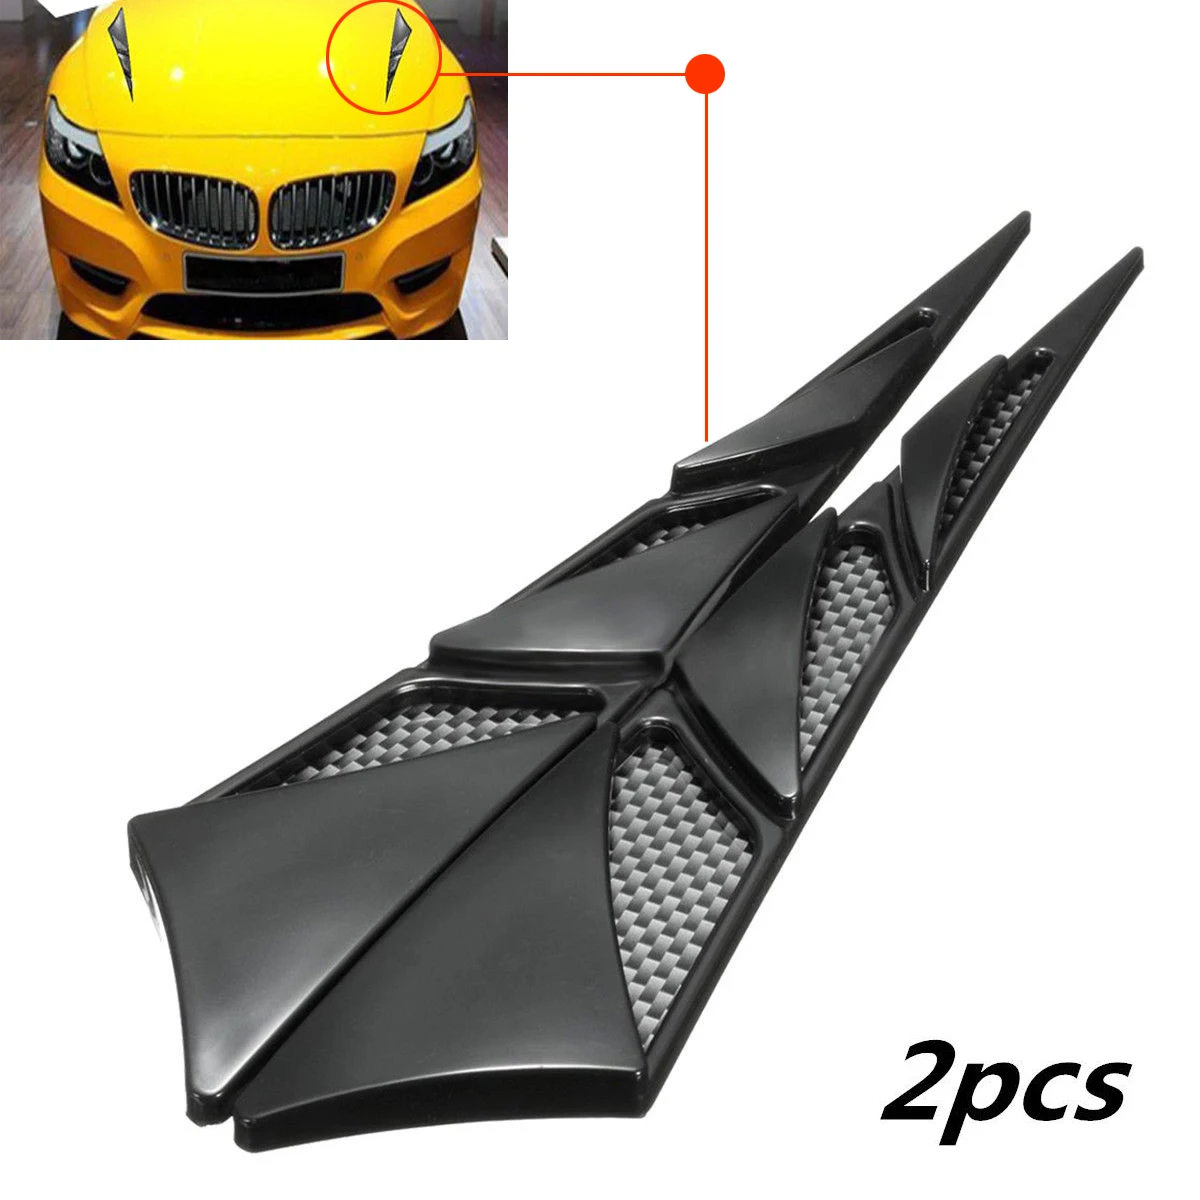 

2Pcs Black Cars Auto Vehicle Tuning Air Flow Intake Scoop Bonnet Vent Cover Hood Trim Decoration Exterior Accessories Universal